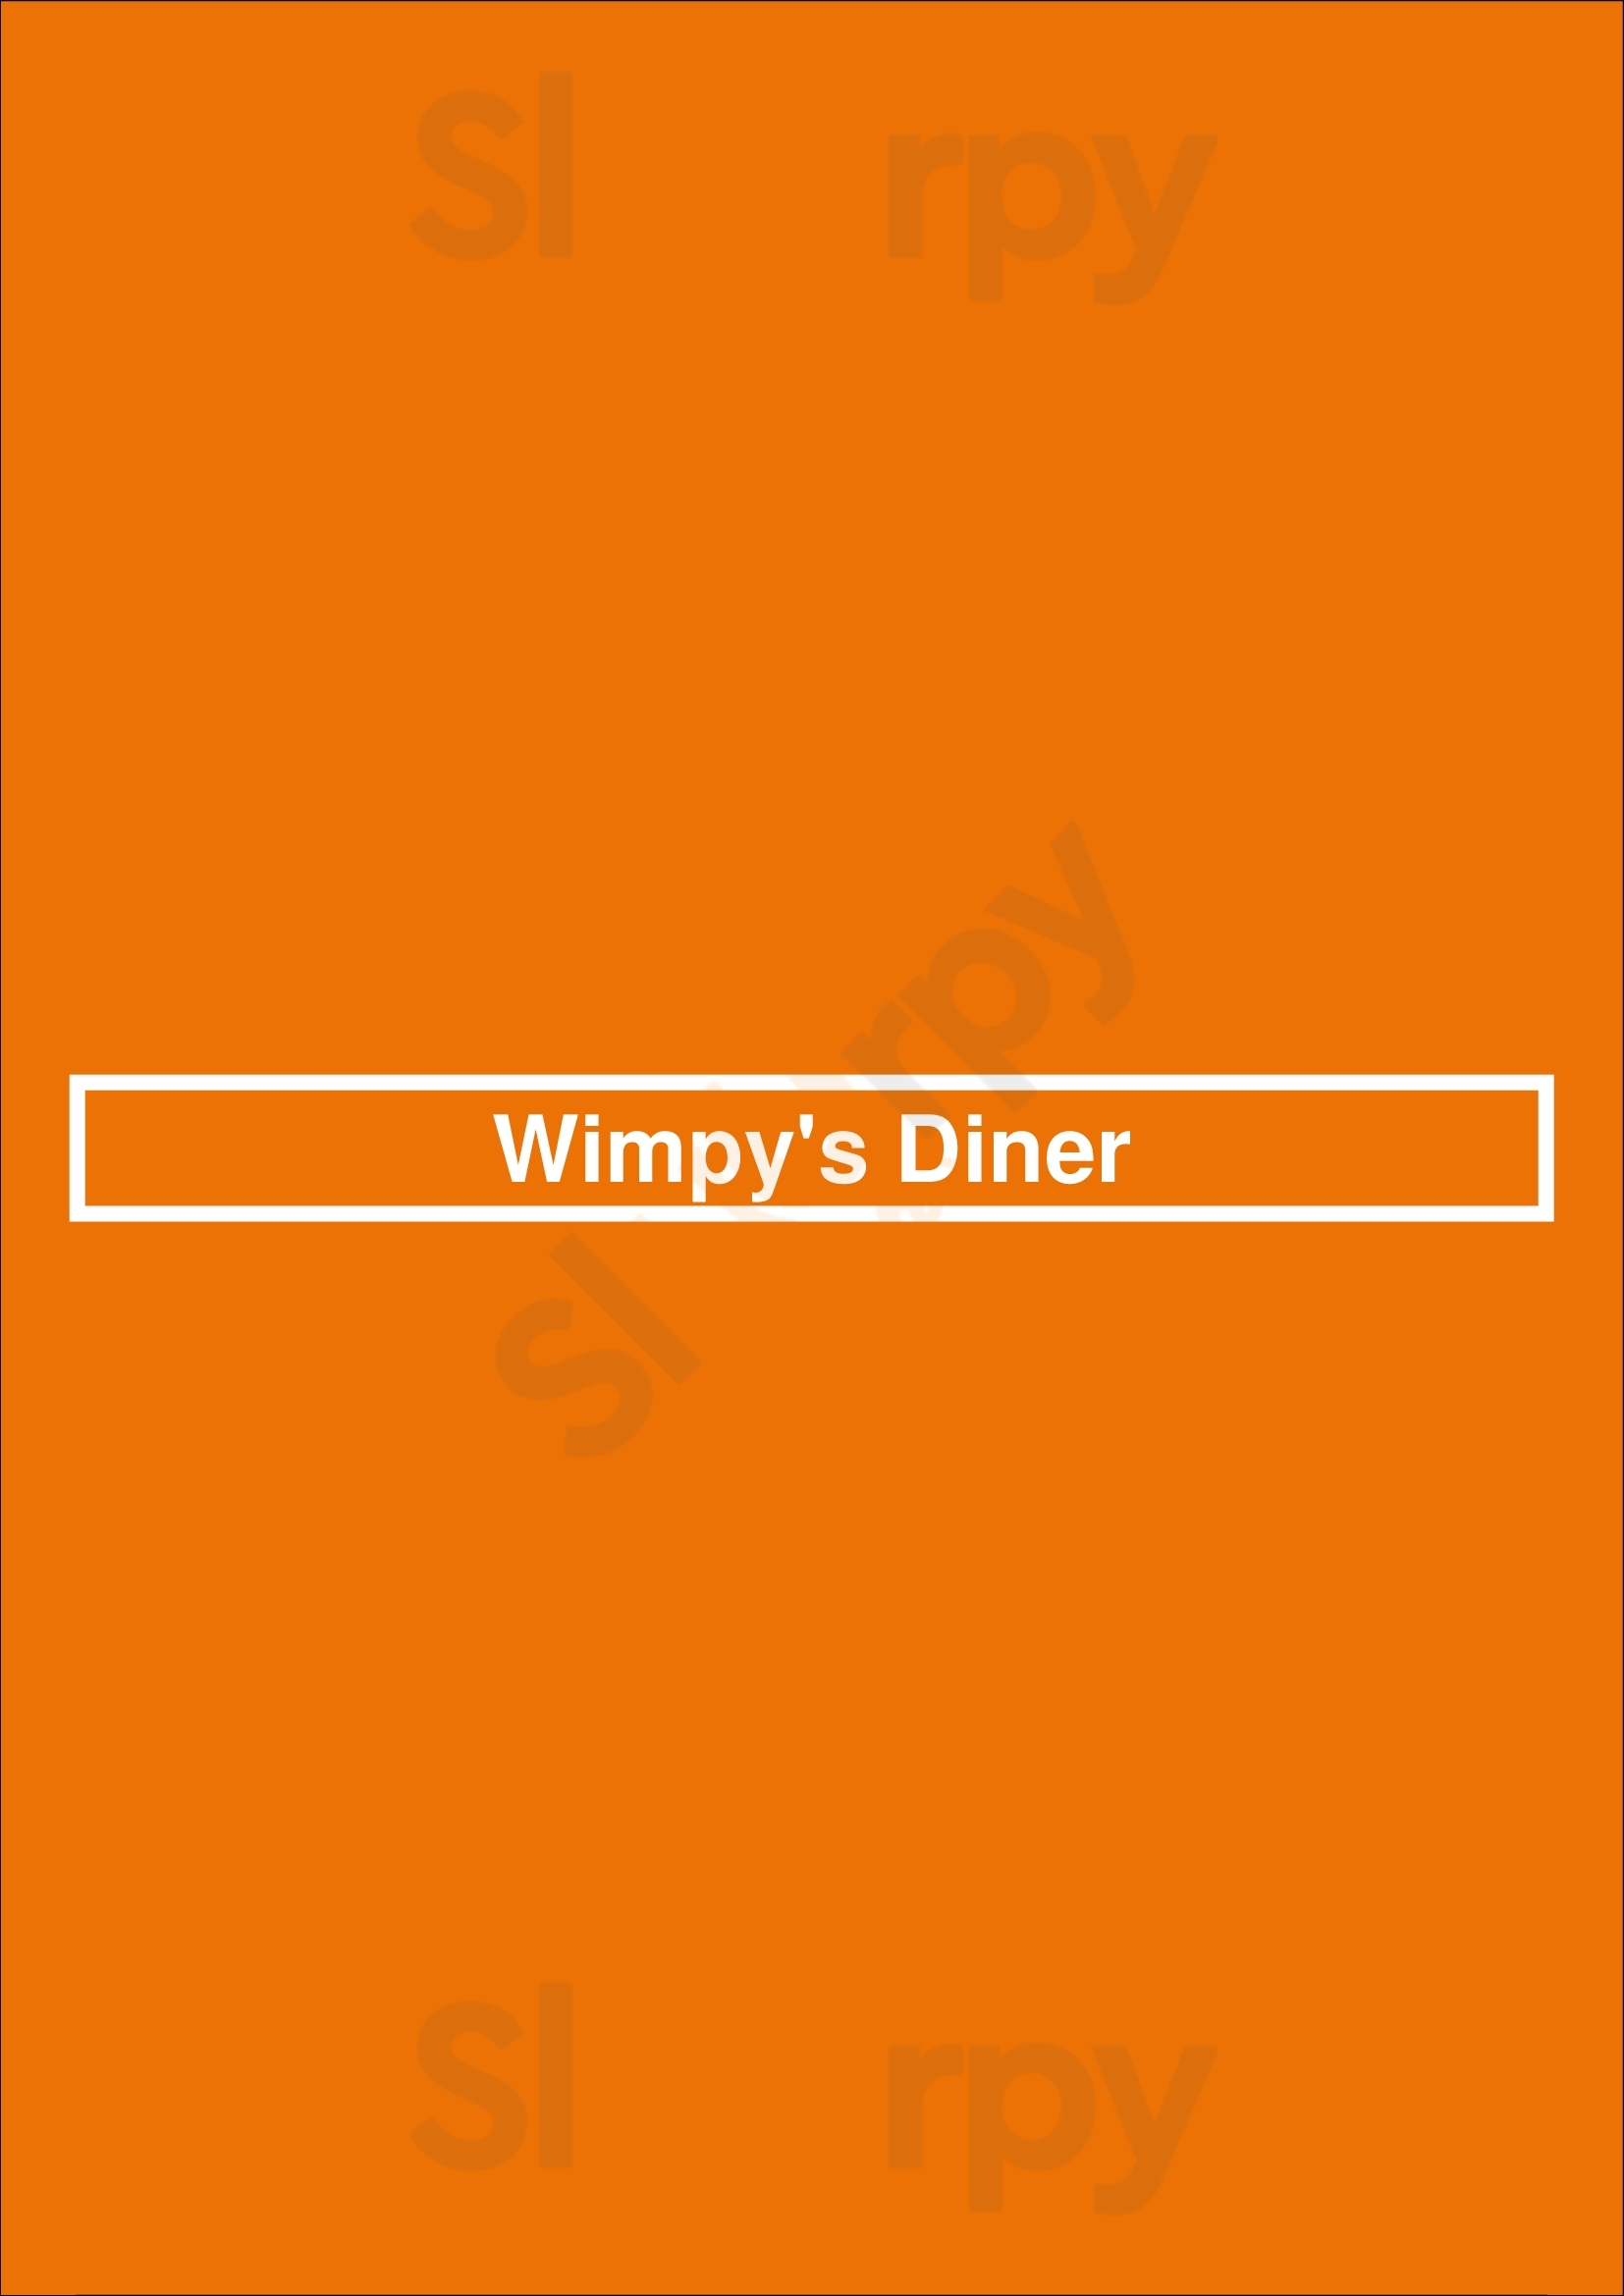 Wimpy's Diner Milton Menu - 1